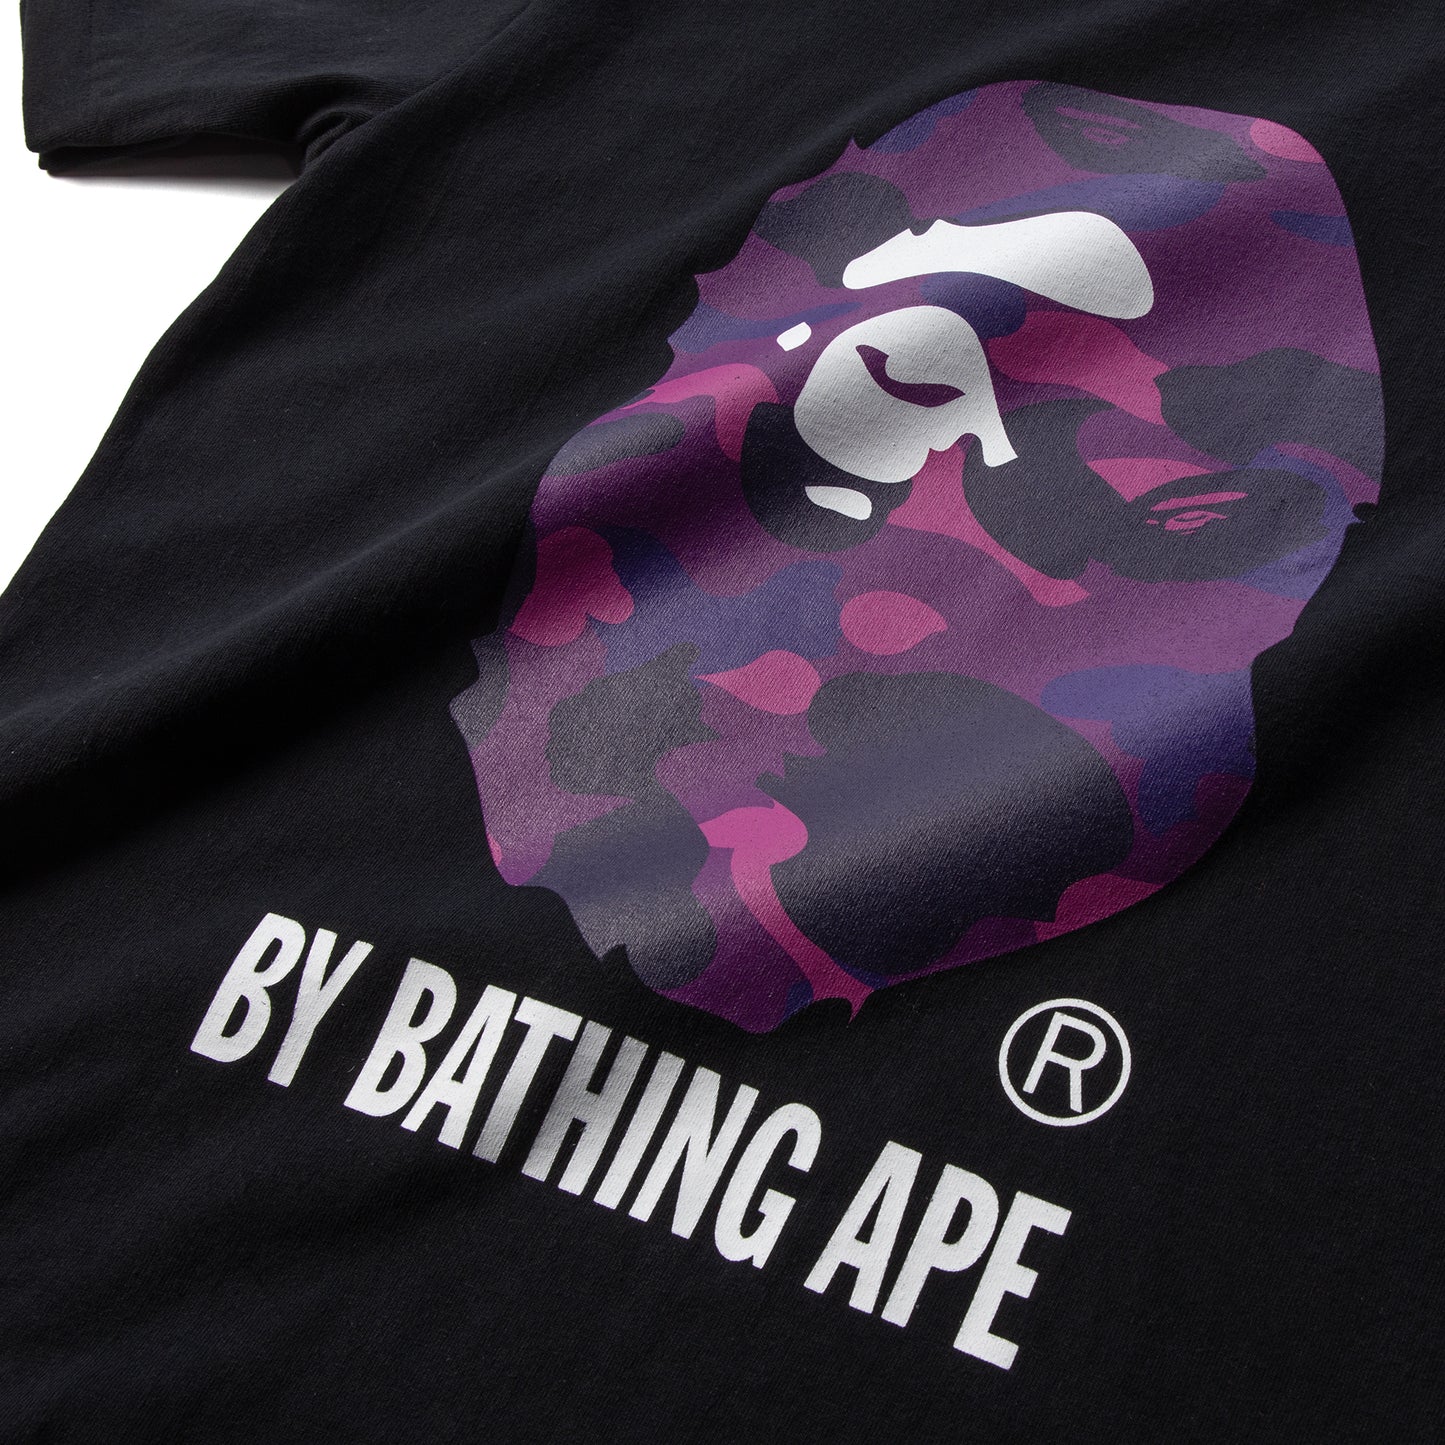 A Bathing Ape Womens Color Camo by Bathing Ape Tee (Black/Purple)